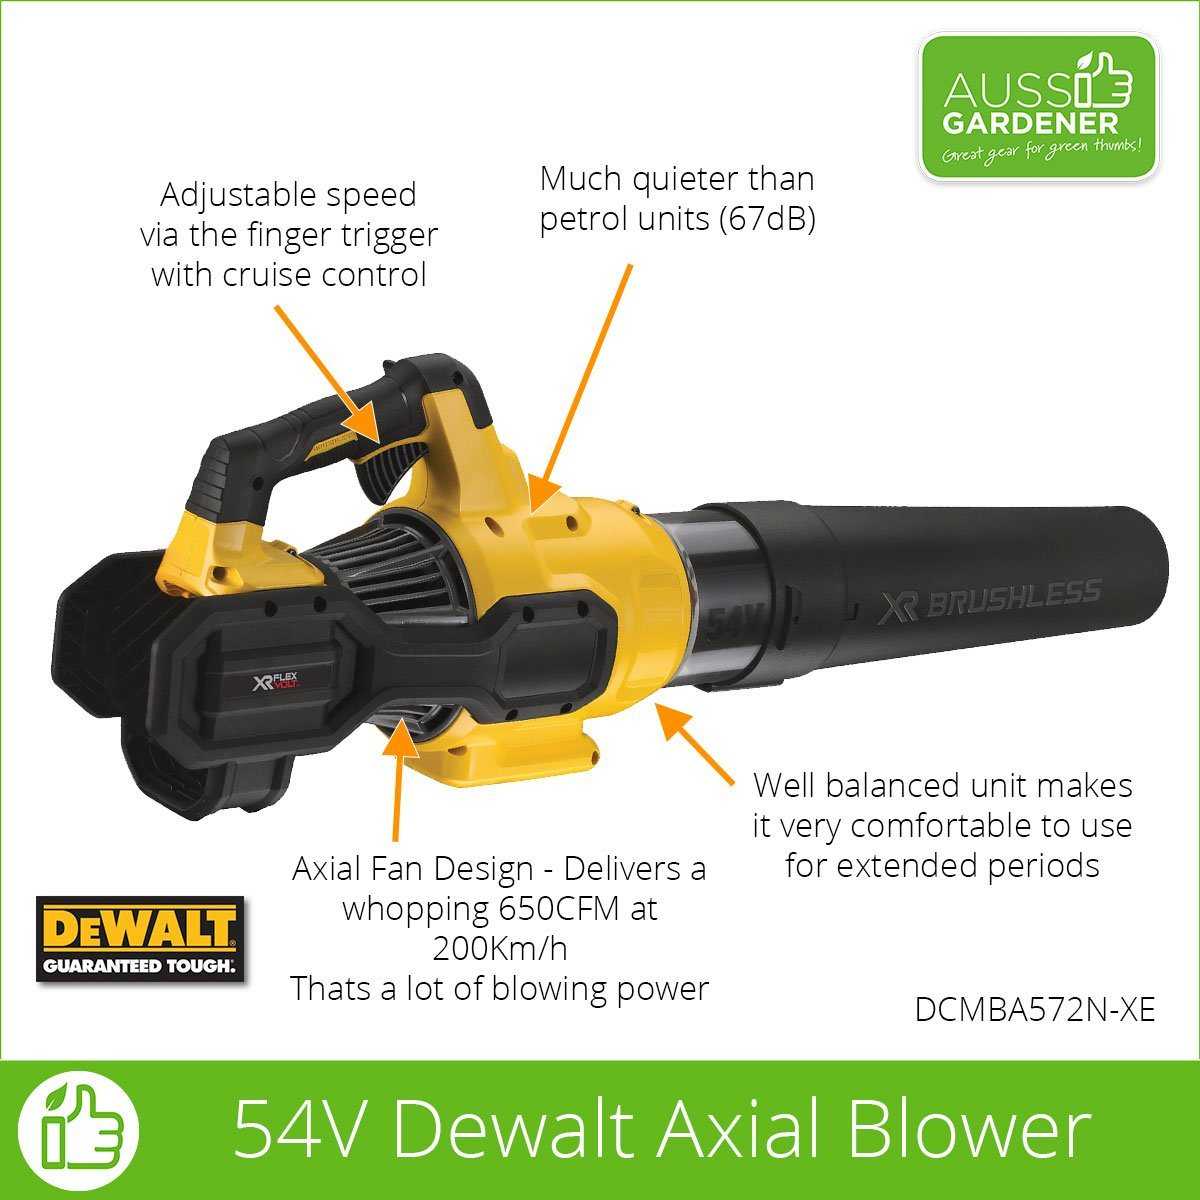 Stanley Black & Decker (Australia) Pty Ltd, Dewalt 54V XR Flexvolt Axial Blower - DCMBA572N-XE or DCMBA572X1-XE